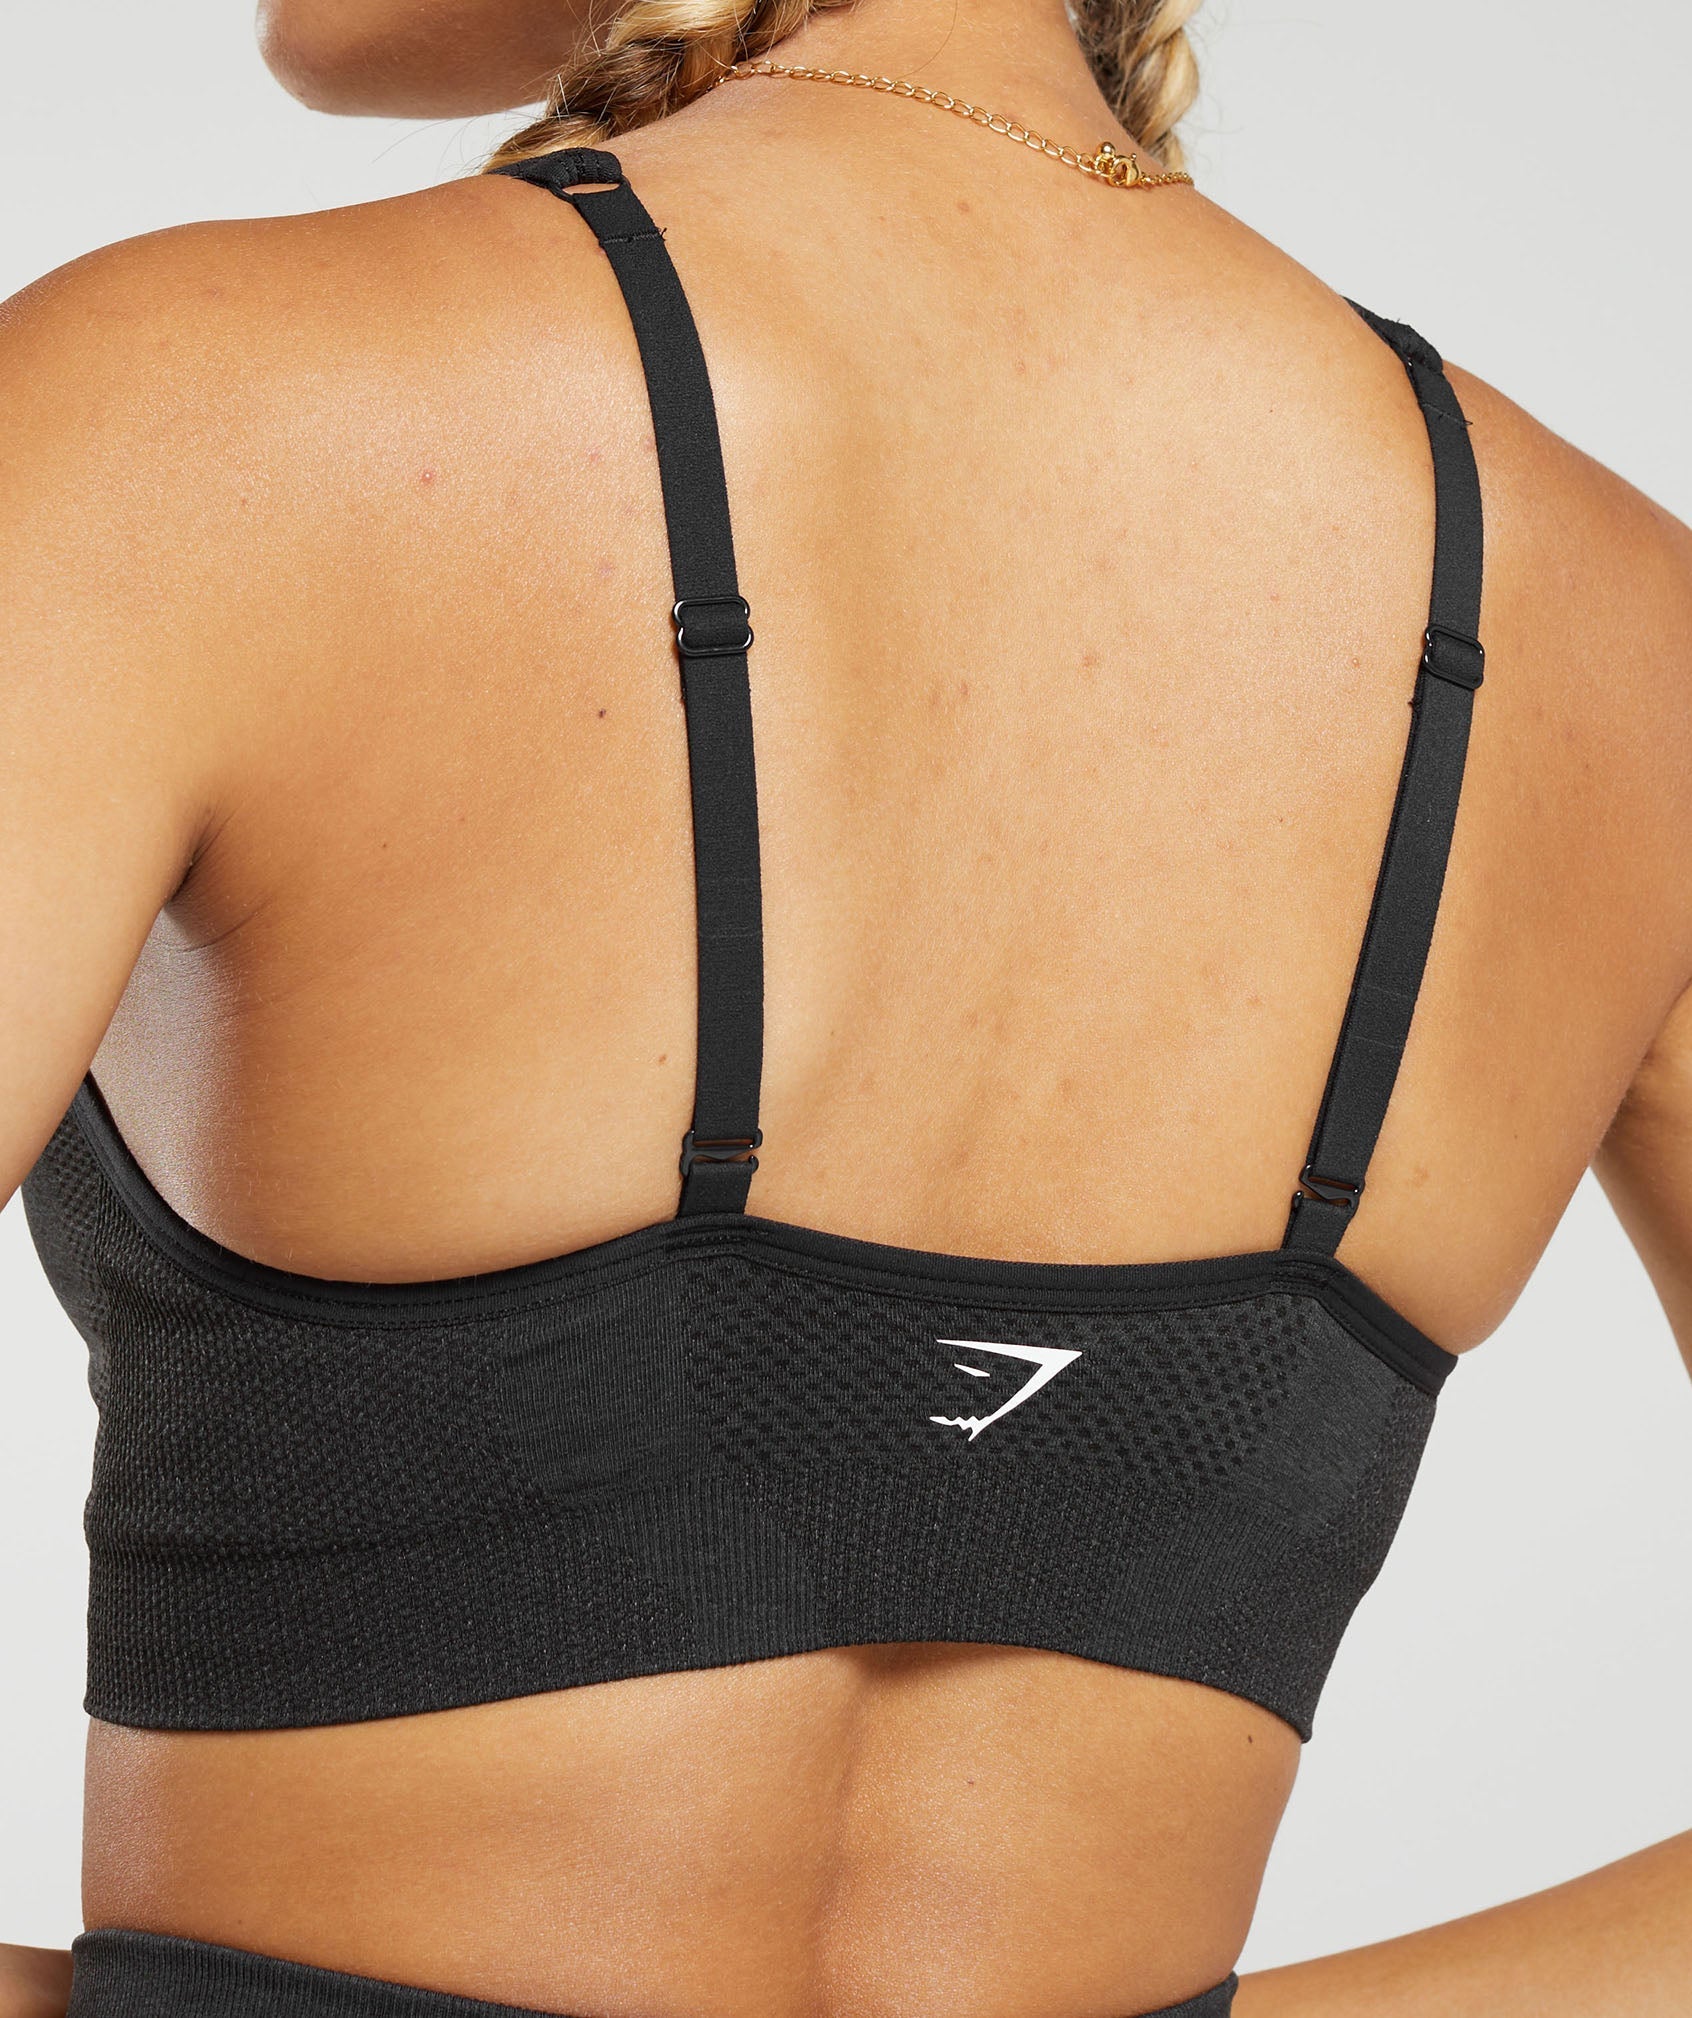 ⚜️ Gymshark vital seamless 2.0 sports bra size small